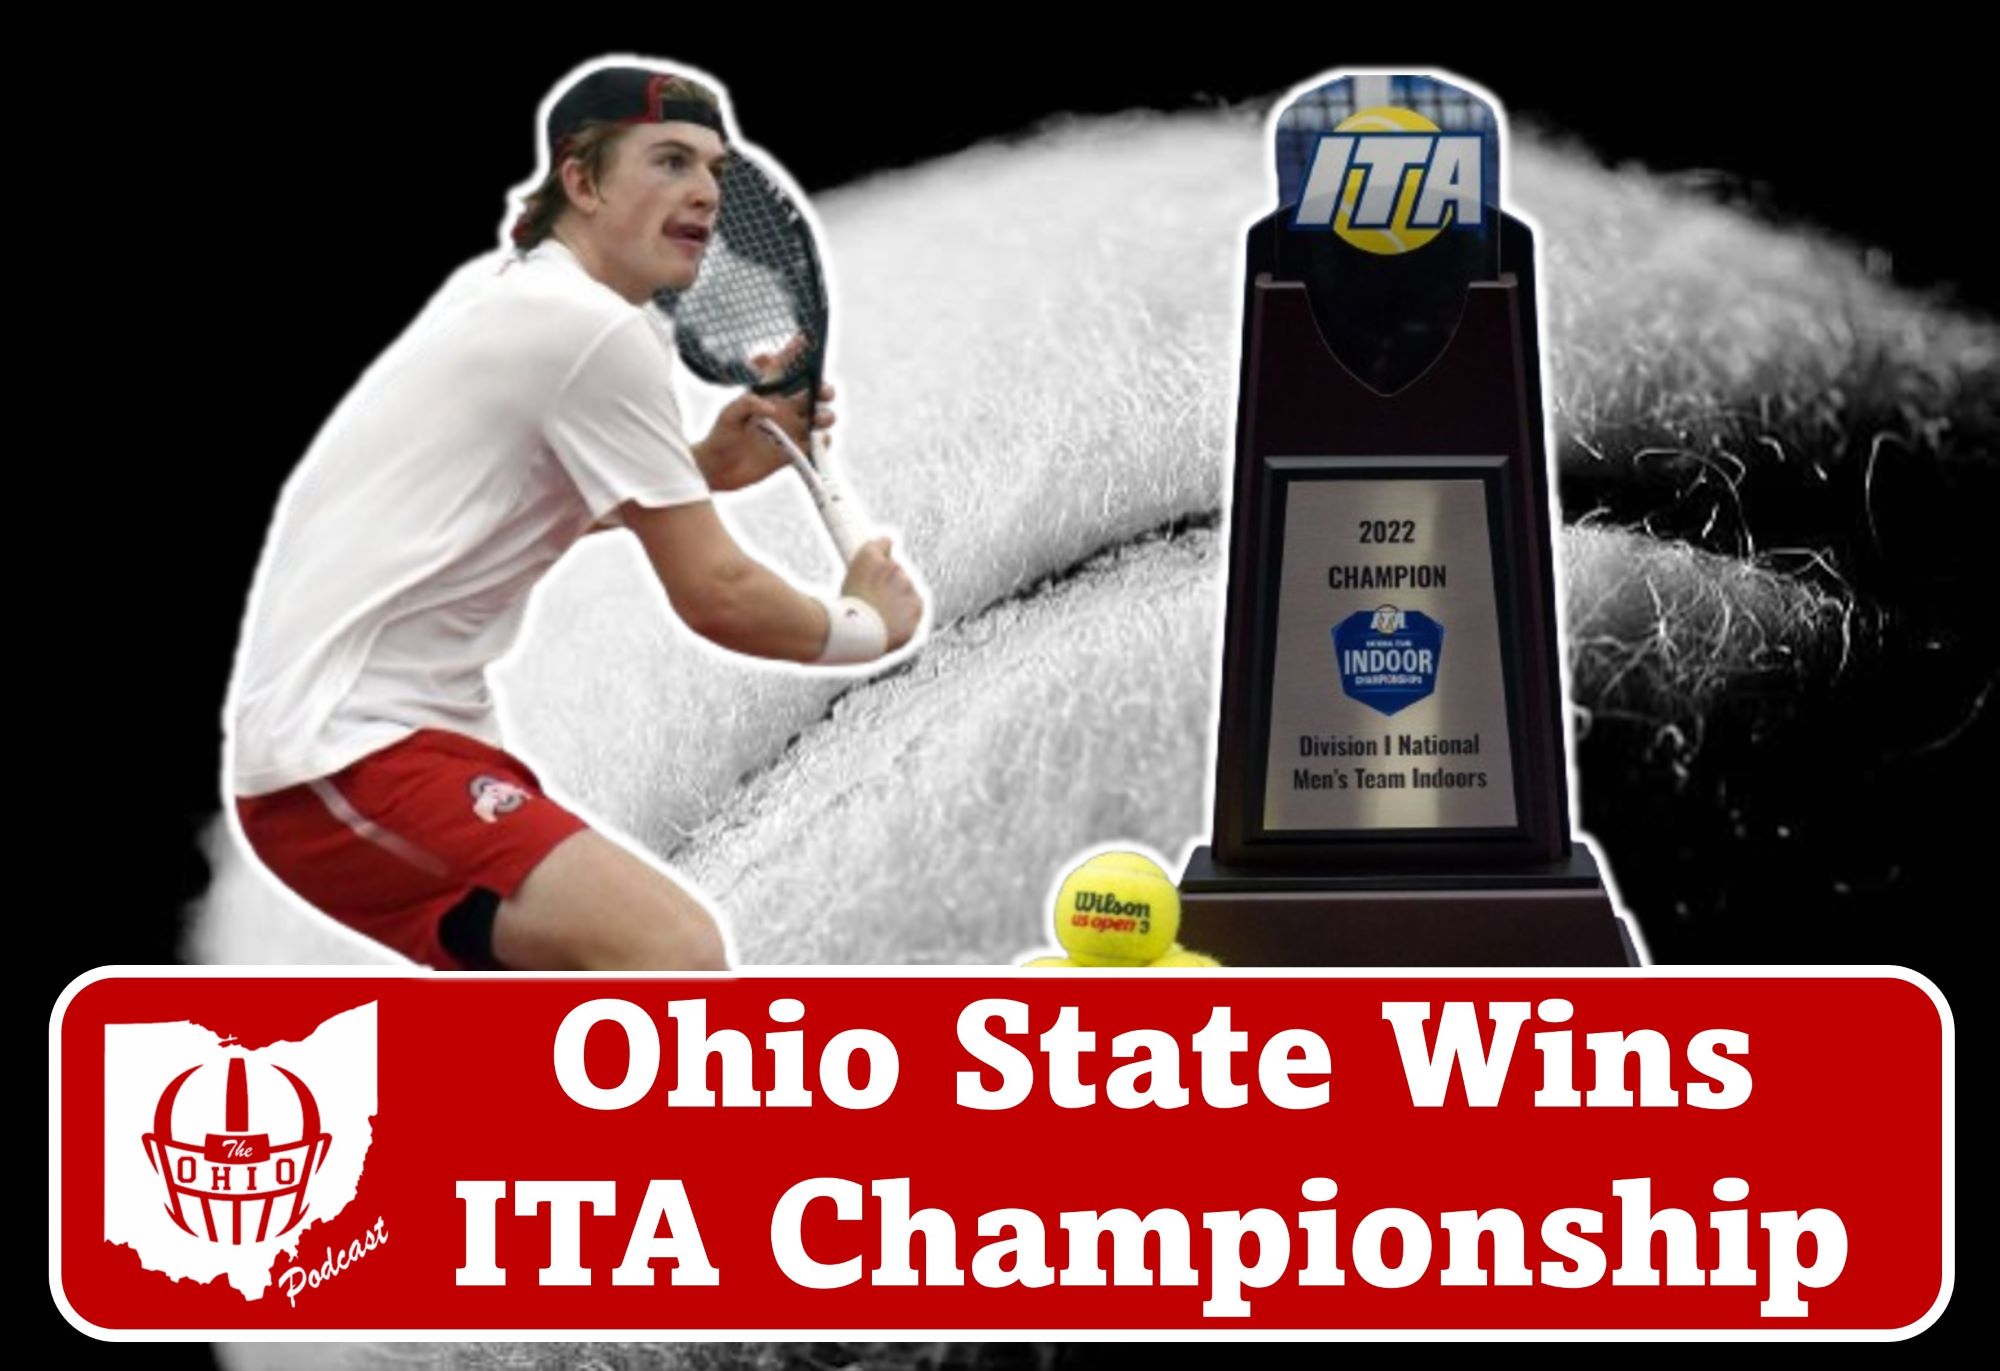 Ohio State Wins the ITA Tennis Championship